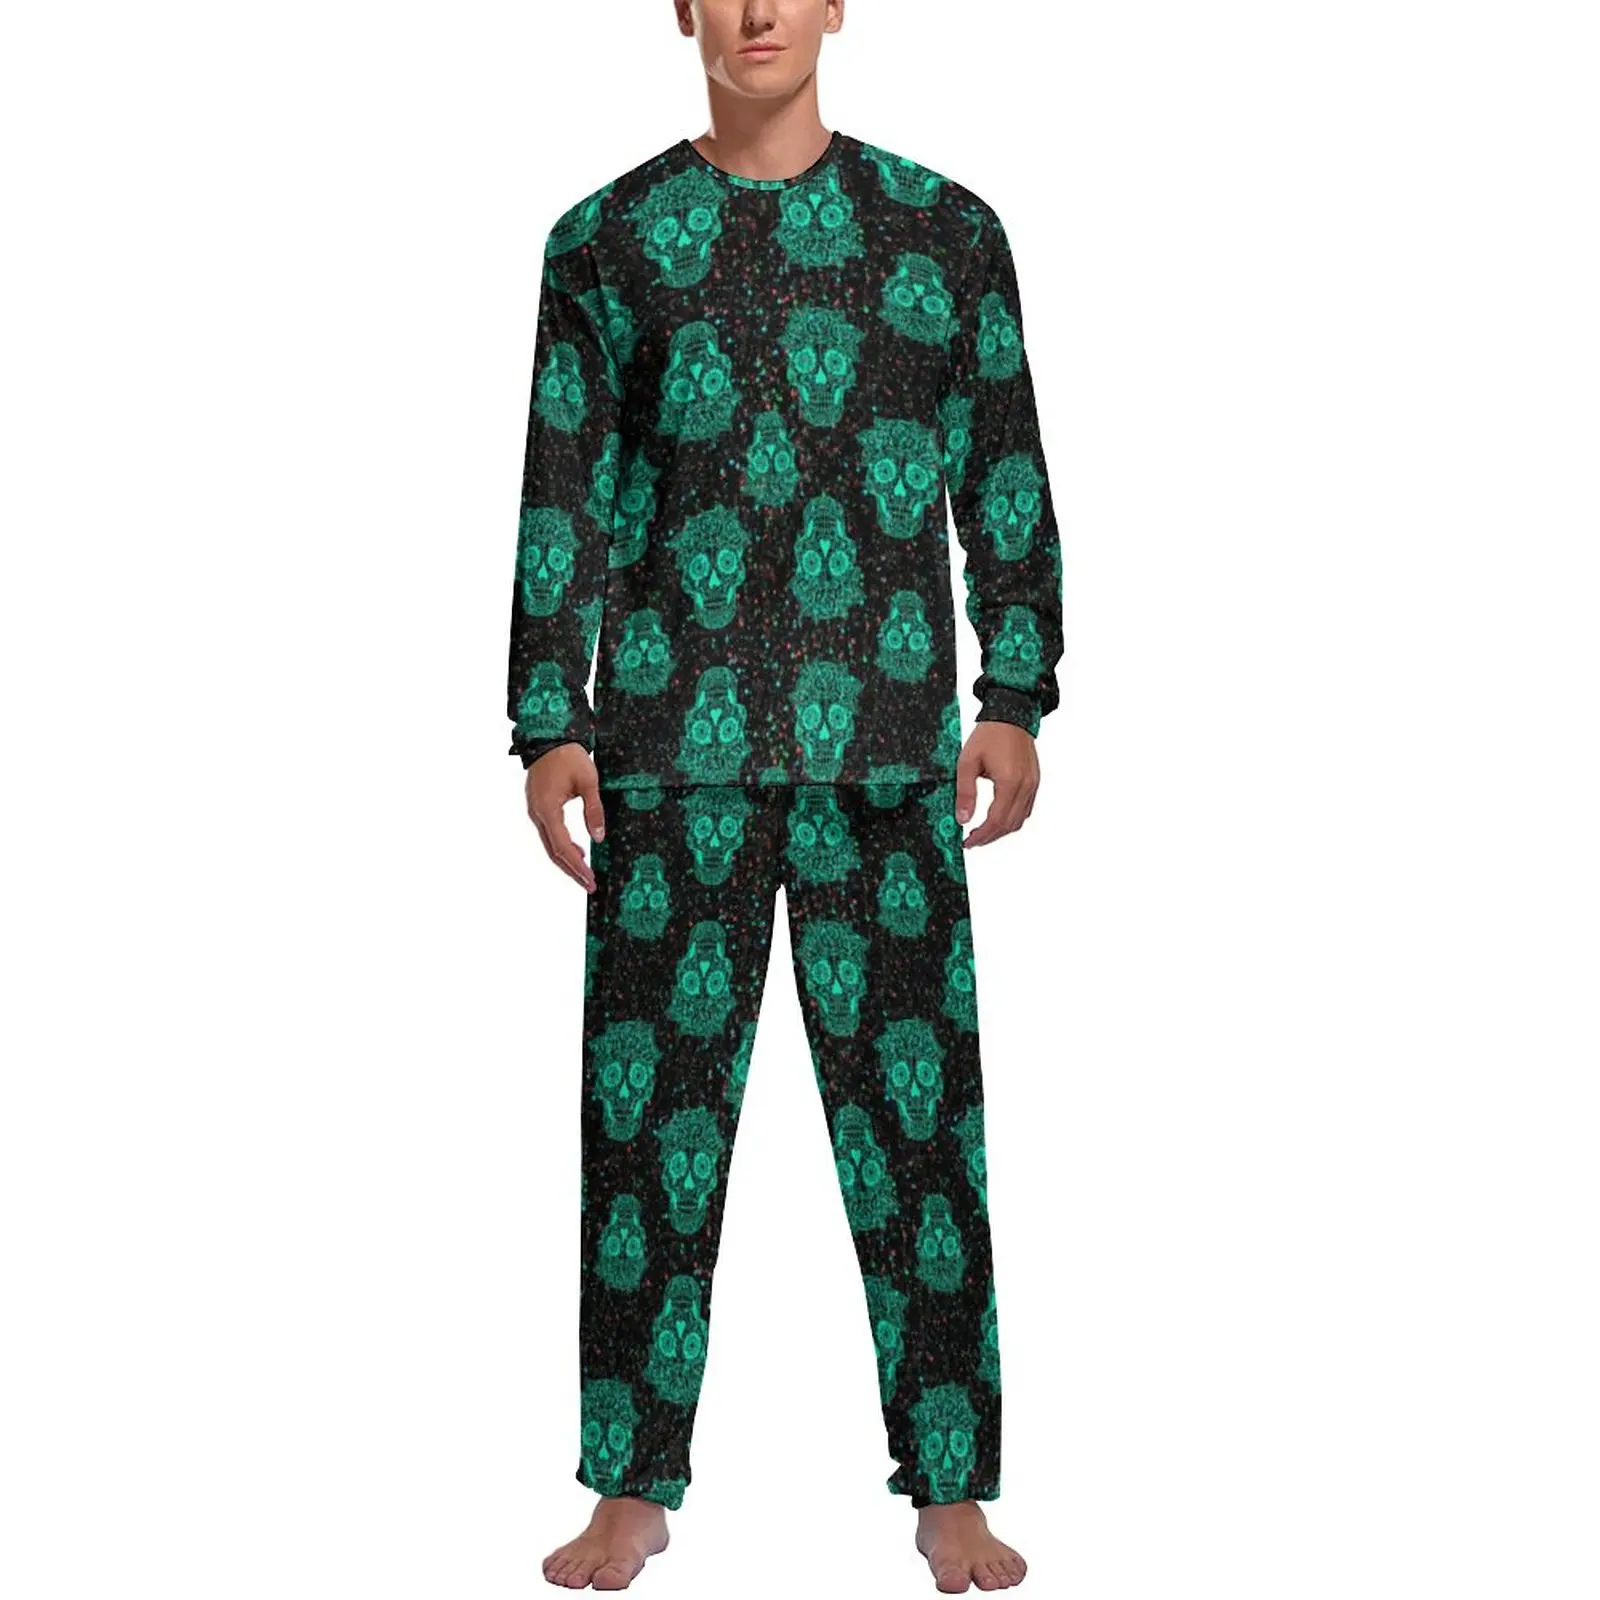 Funky Sugar Skull Pajamas Spring 2 Pieces Colorful Dots Print Cute Pajama Sets Man Long Sleeve Casual Graphic Sleepwear